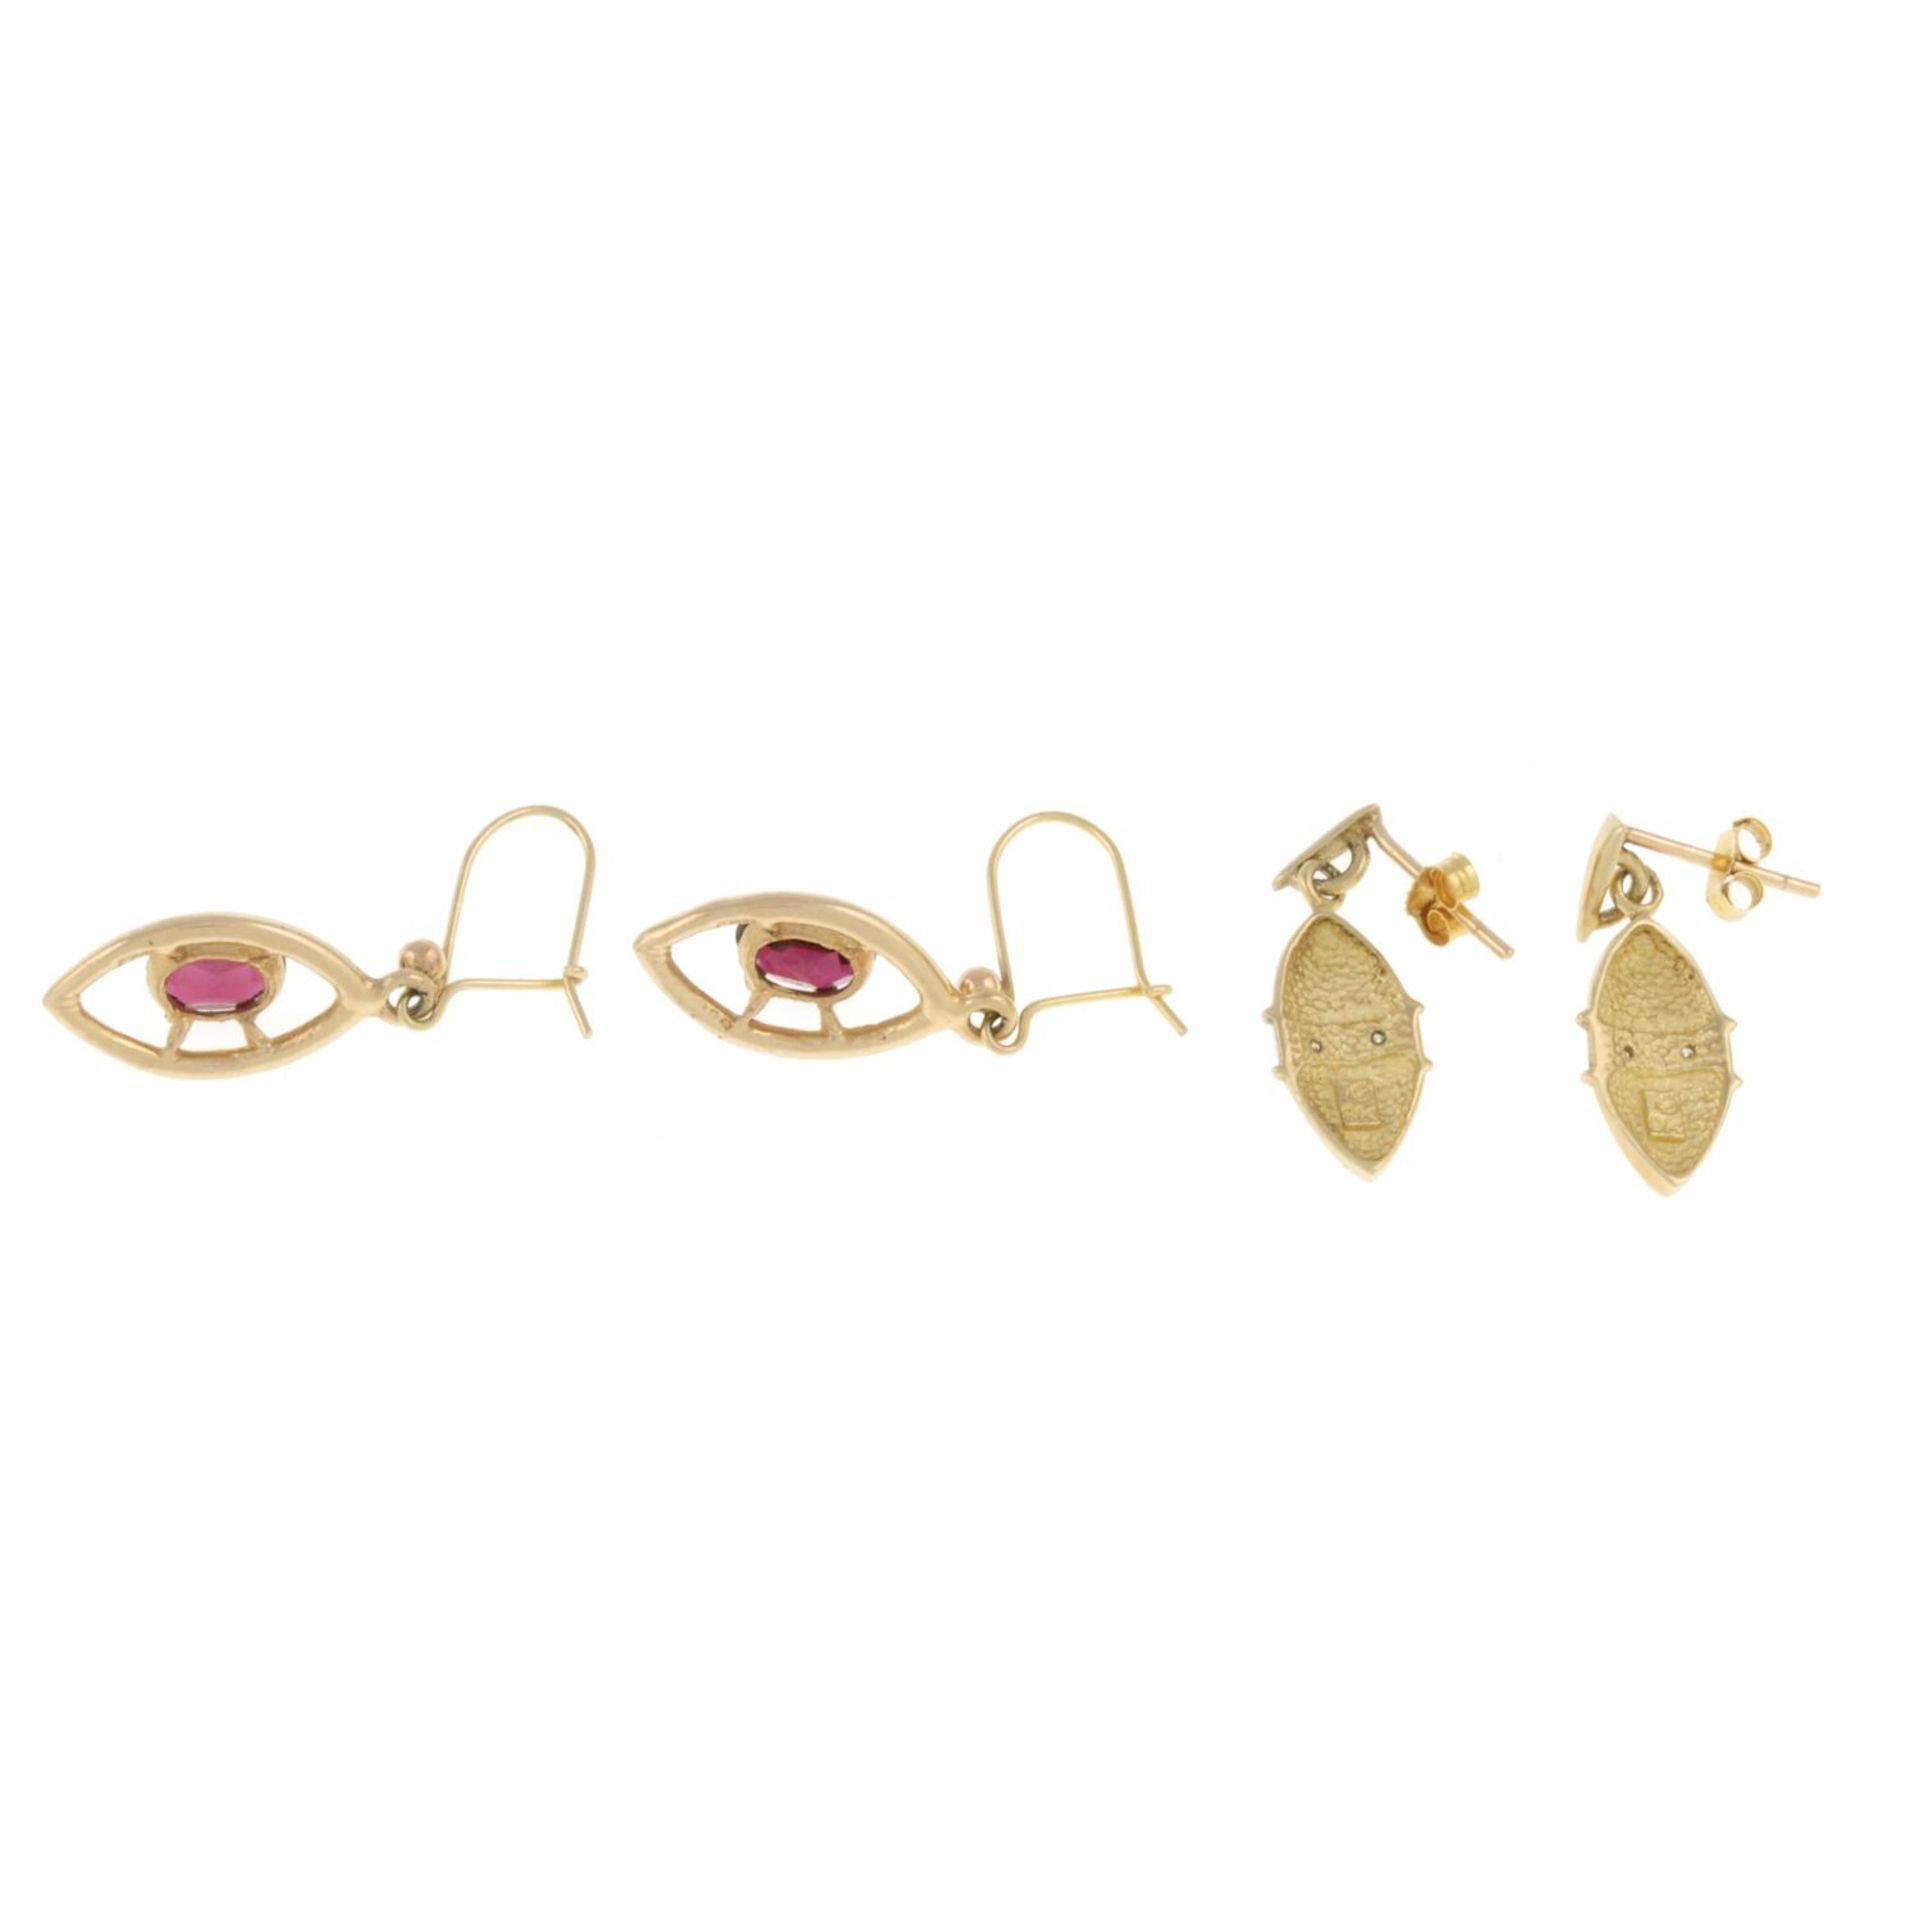 Diamond drop earrings, stamped 9k, length 2.3cms, 2.4gms. - Image 2 of 2